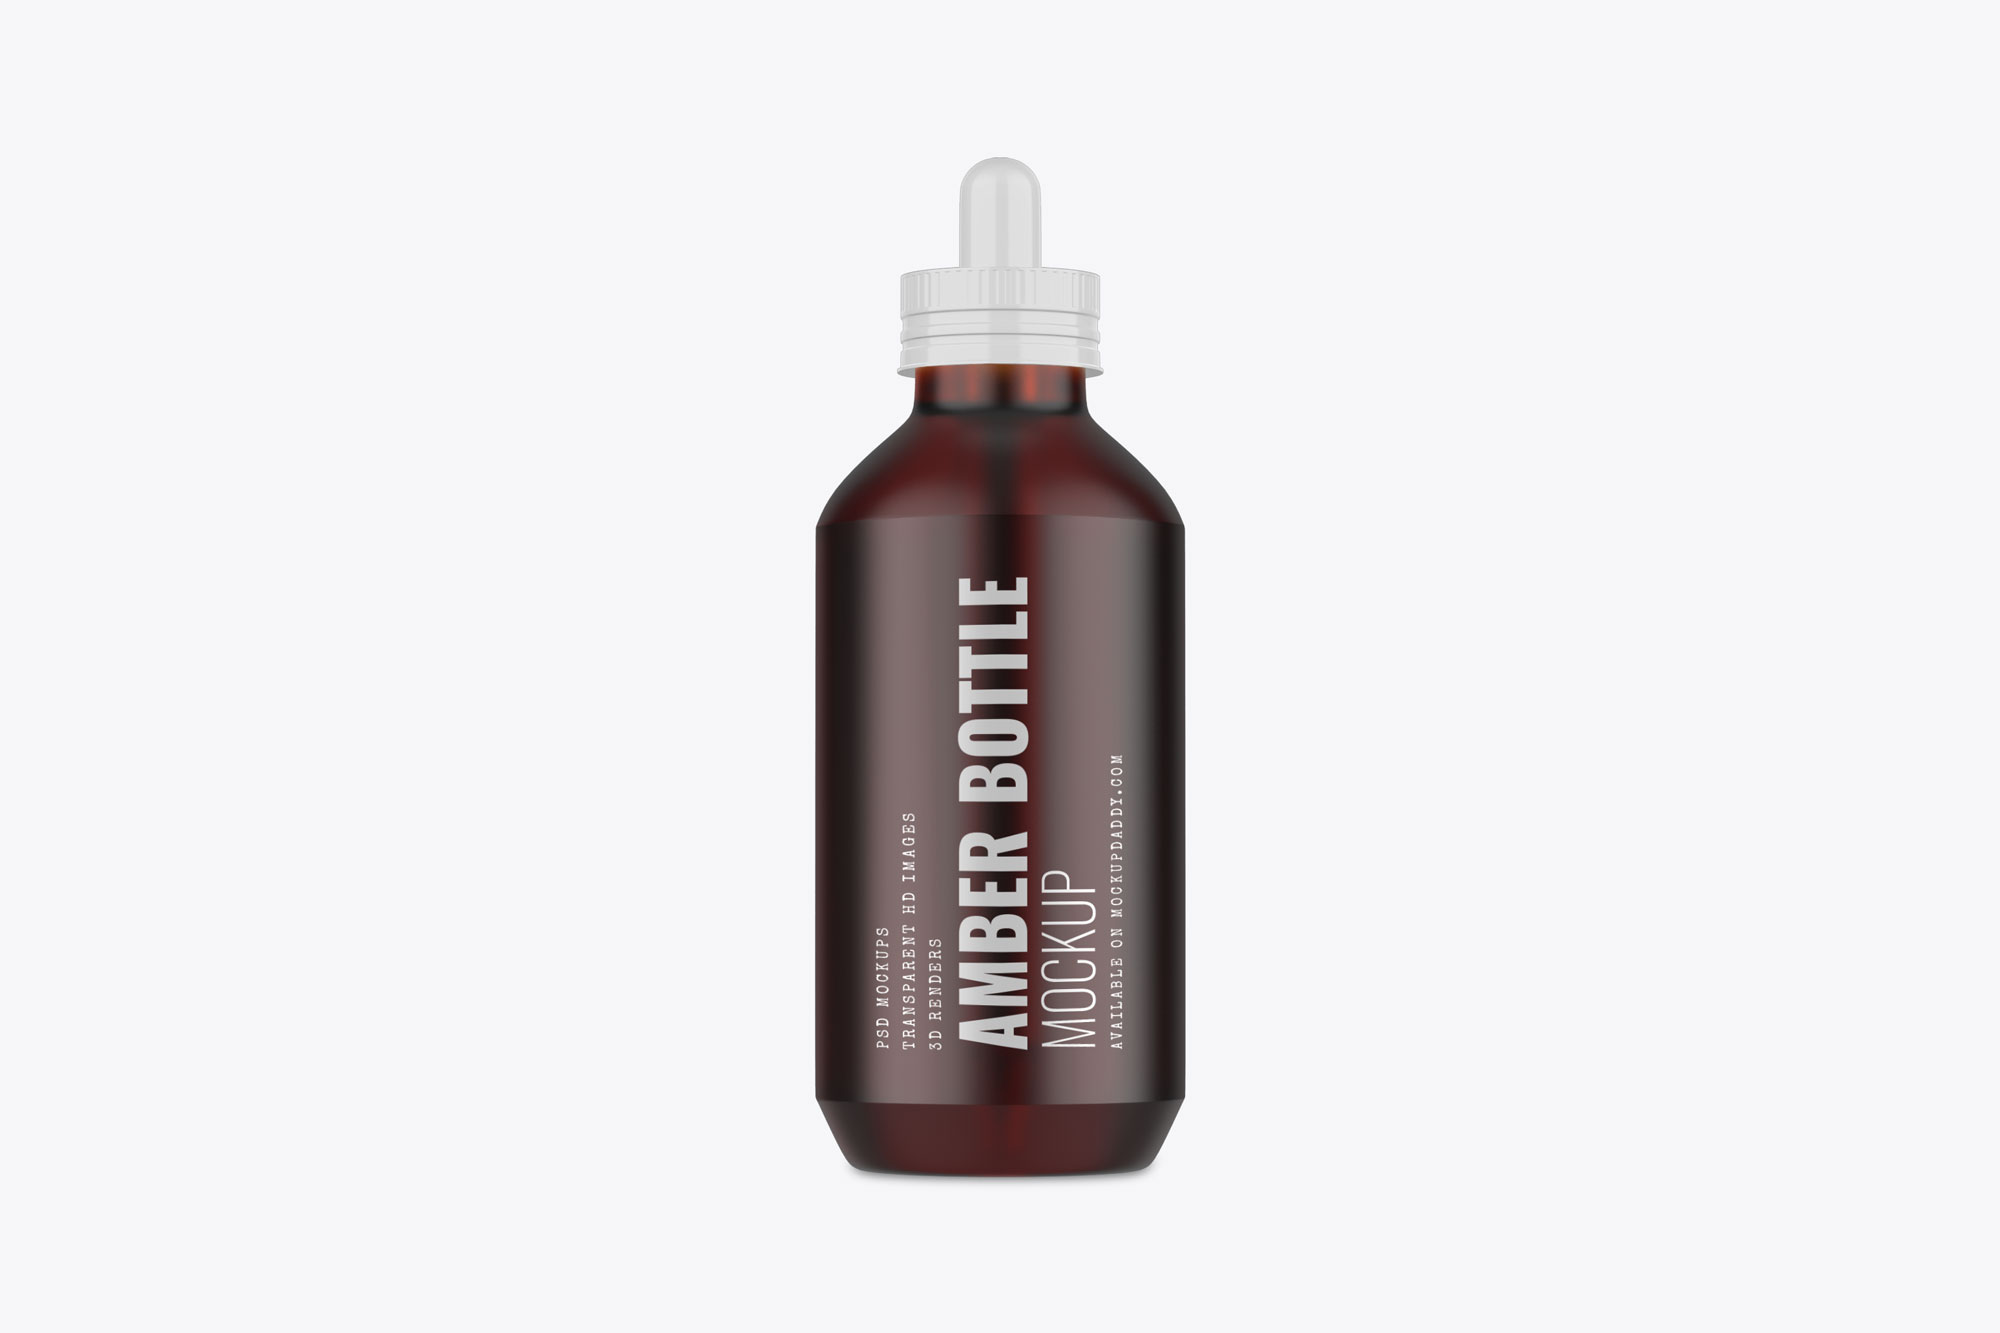 Balck Oil Bottle Mockup Clear Label and white dropper